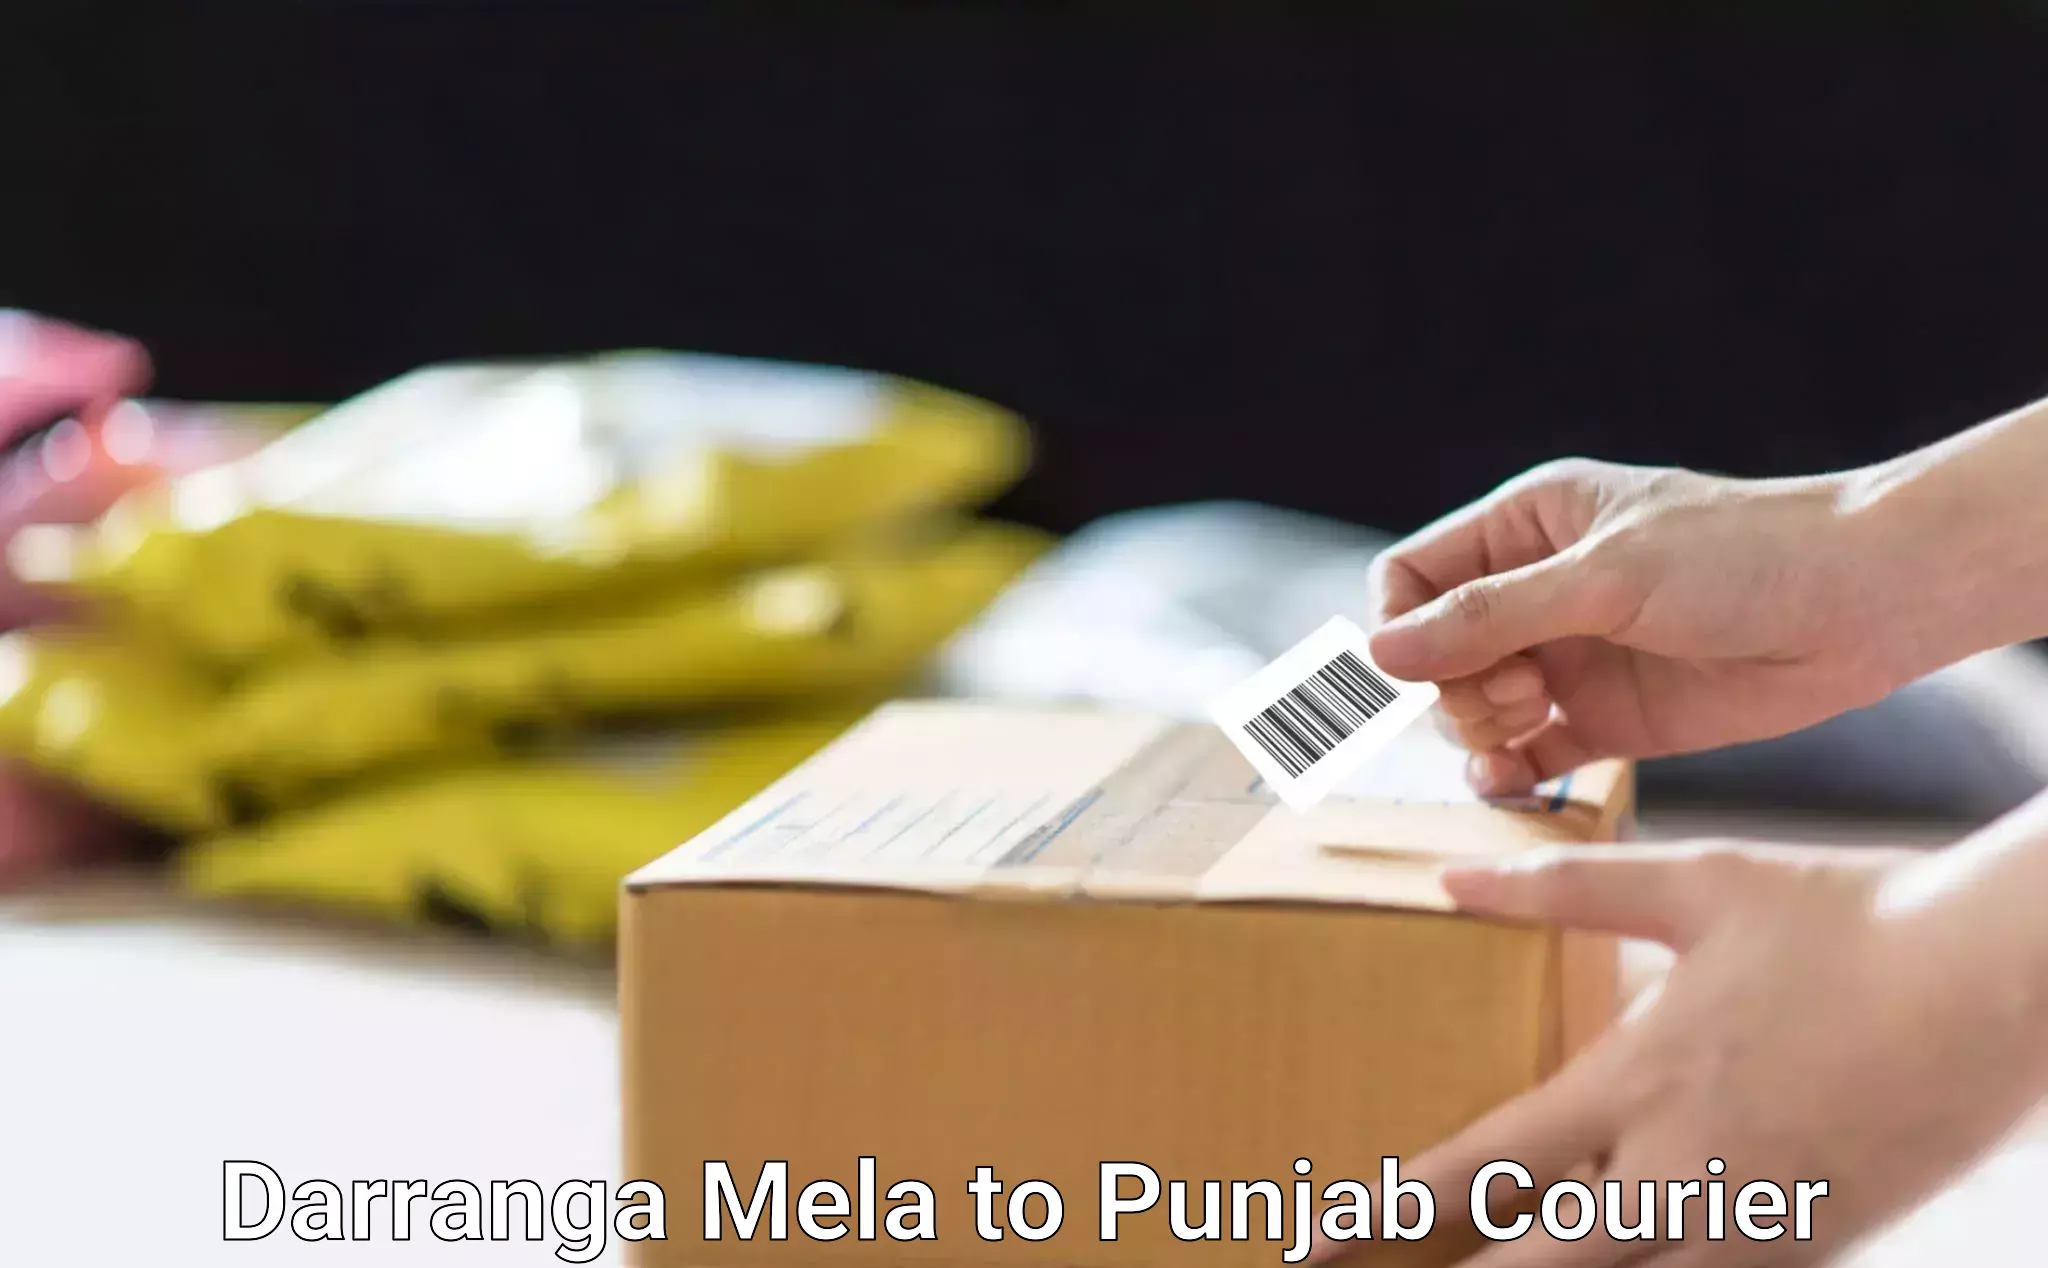 Efficient parcel service Darranga Mela to Kapurthala